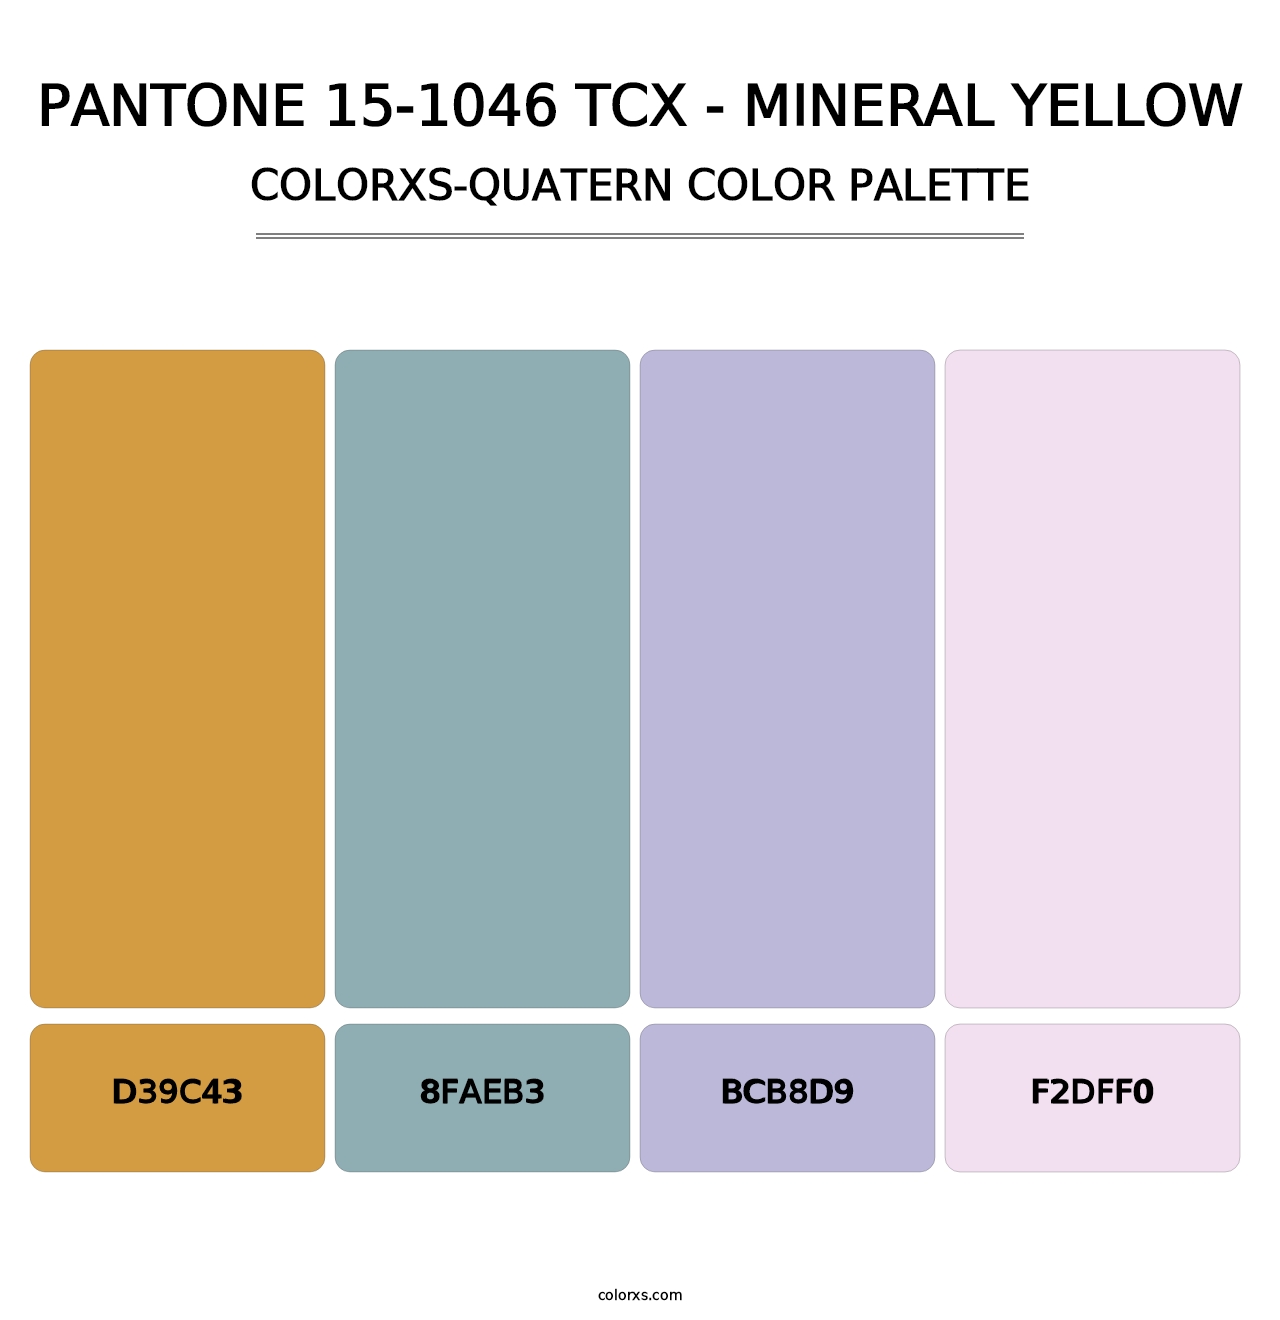 PANTONE 15-1046 TCX - Mineral Yellow - Colorxs Quatern Palette